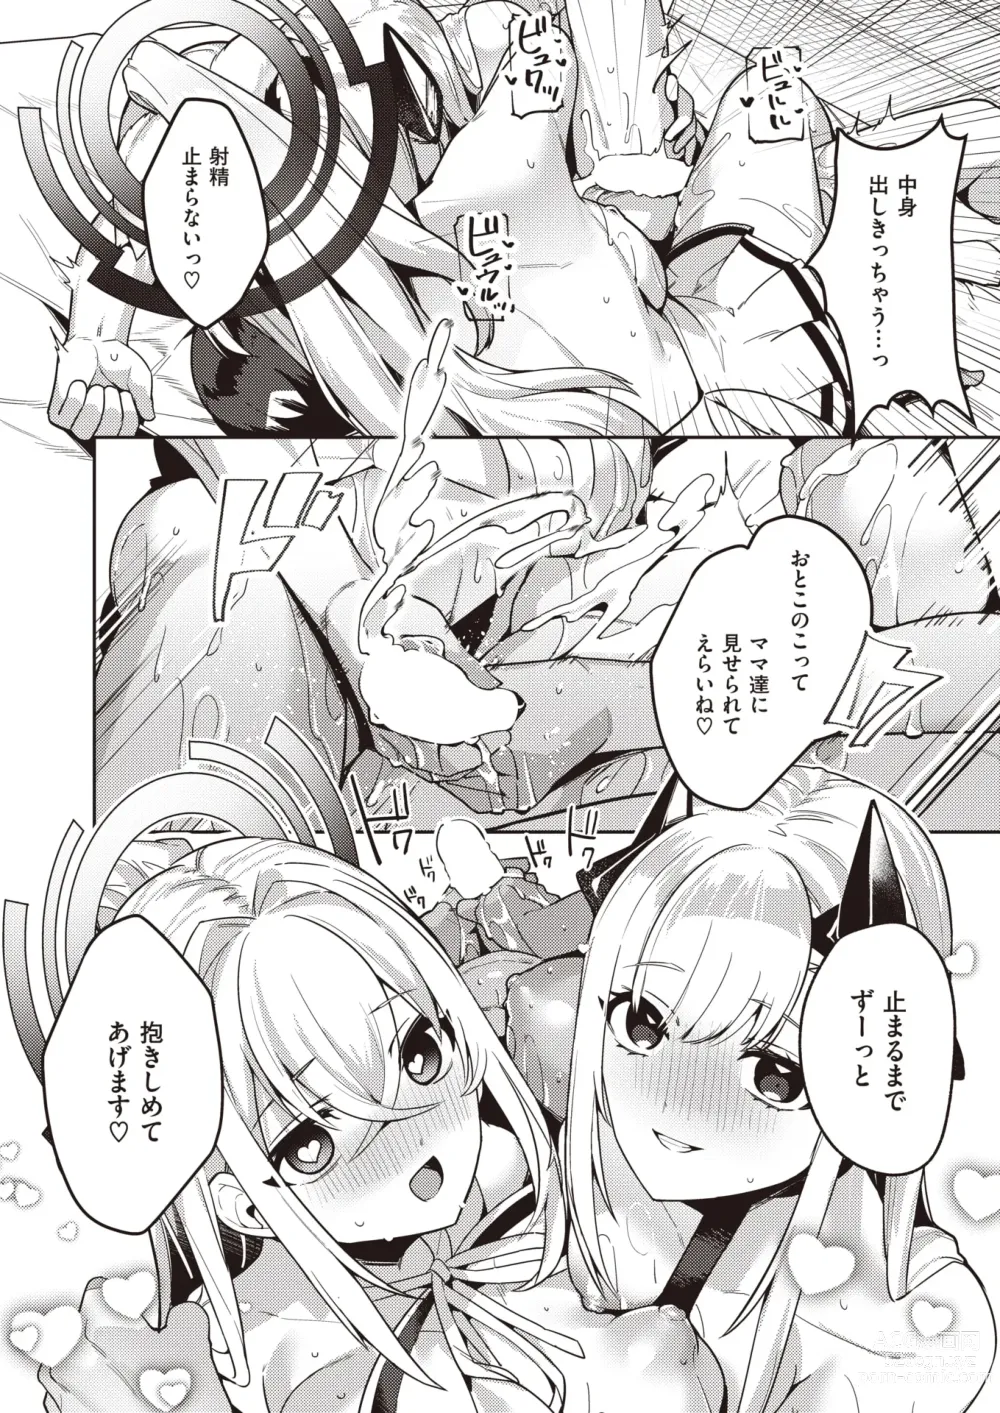 Page 65 of manga Isekai Rakuten Vol. 29